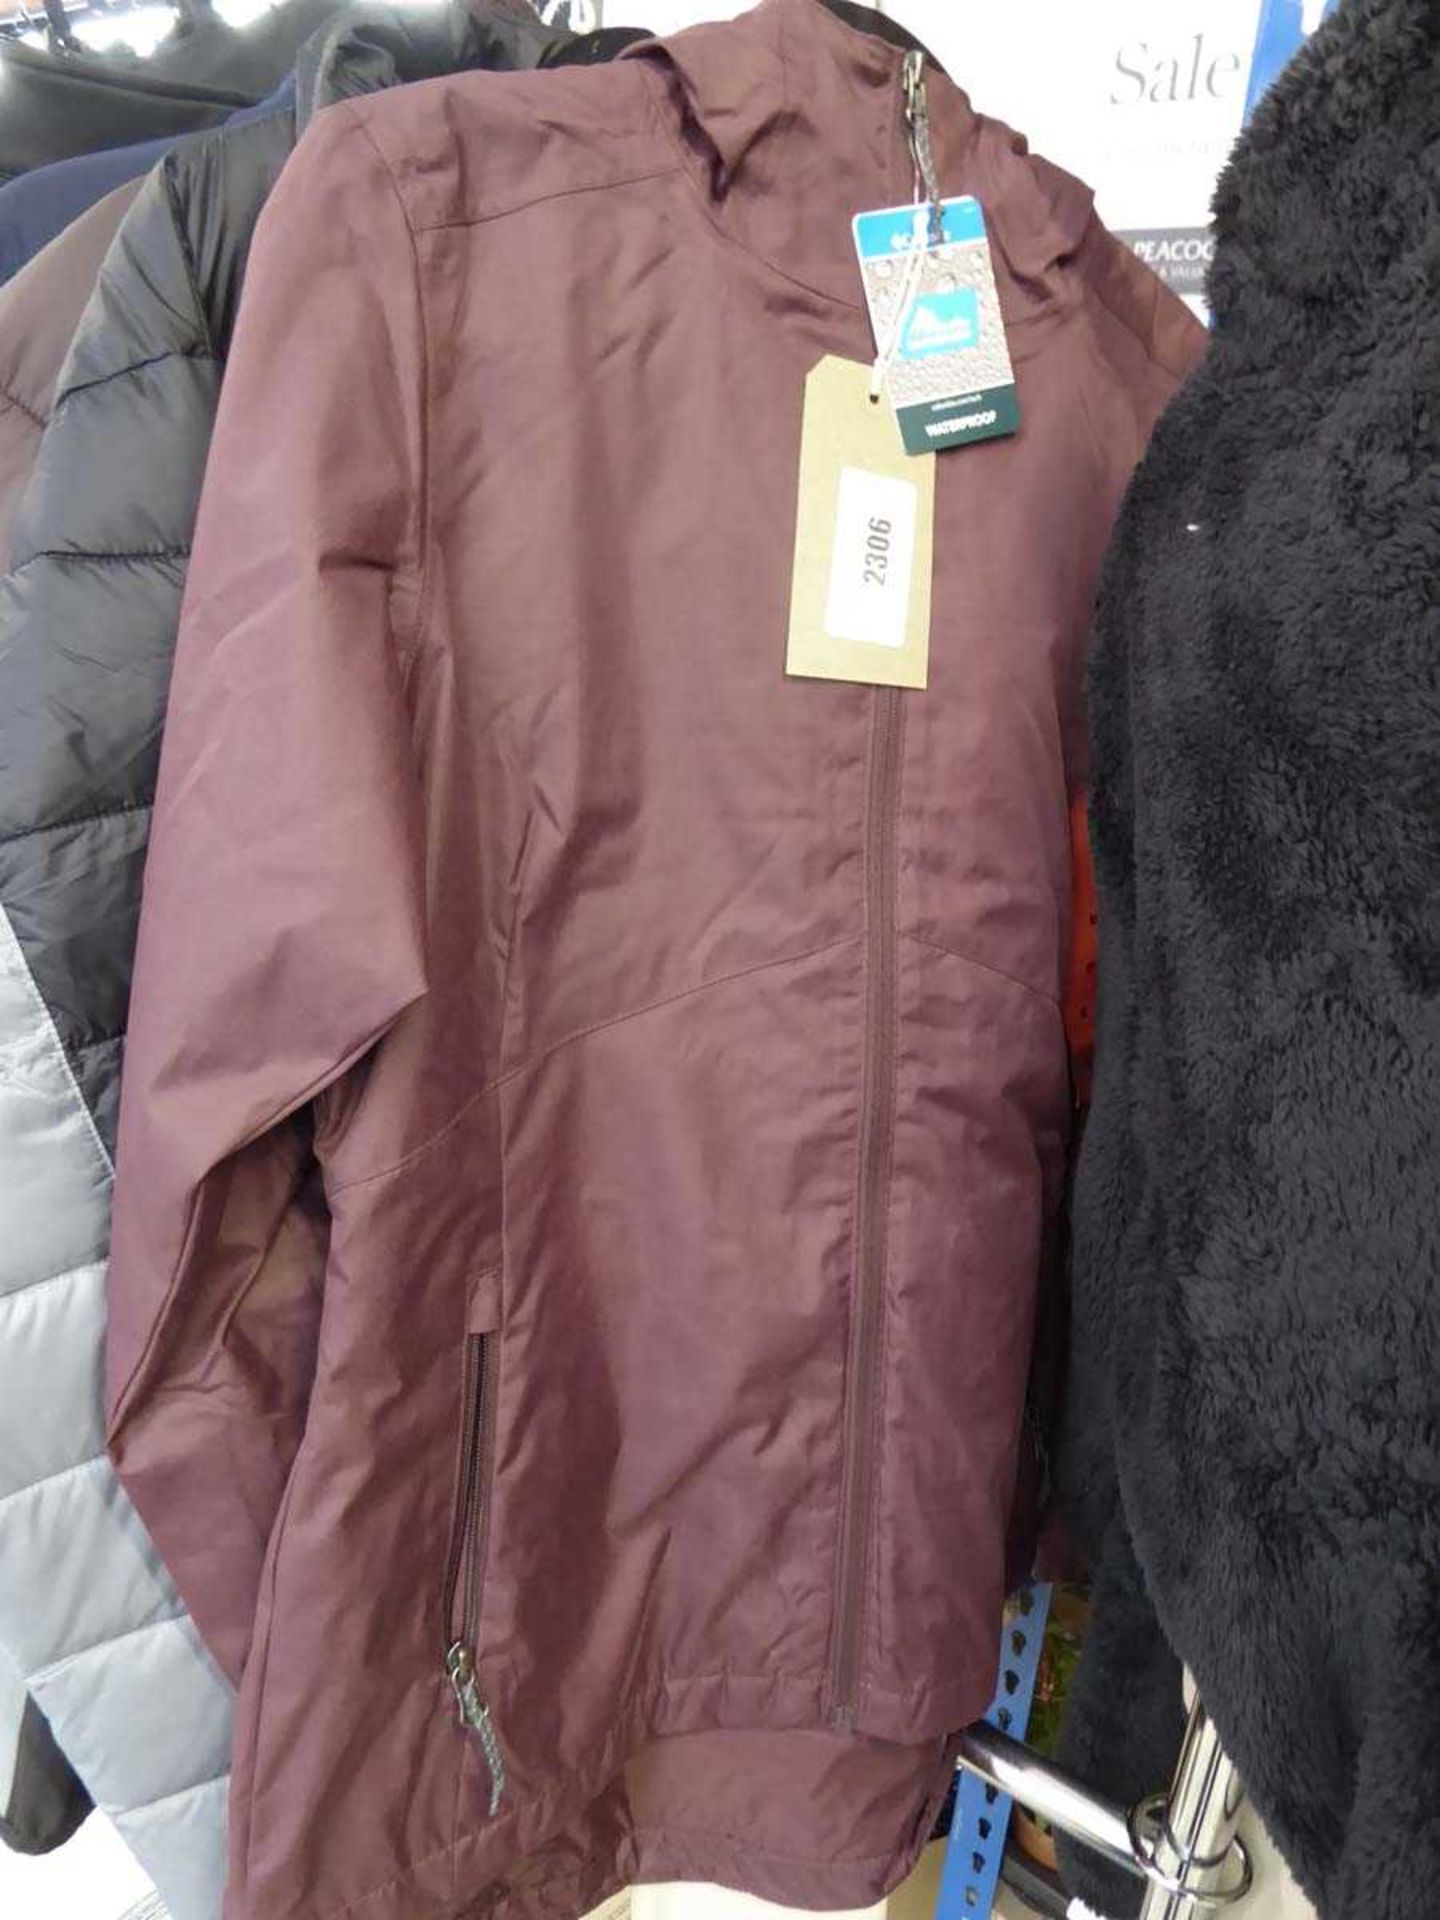 +VAT Columbia waterproof coat in maroon (size M) with mens Columbia jumper in beige and black (